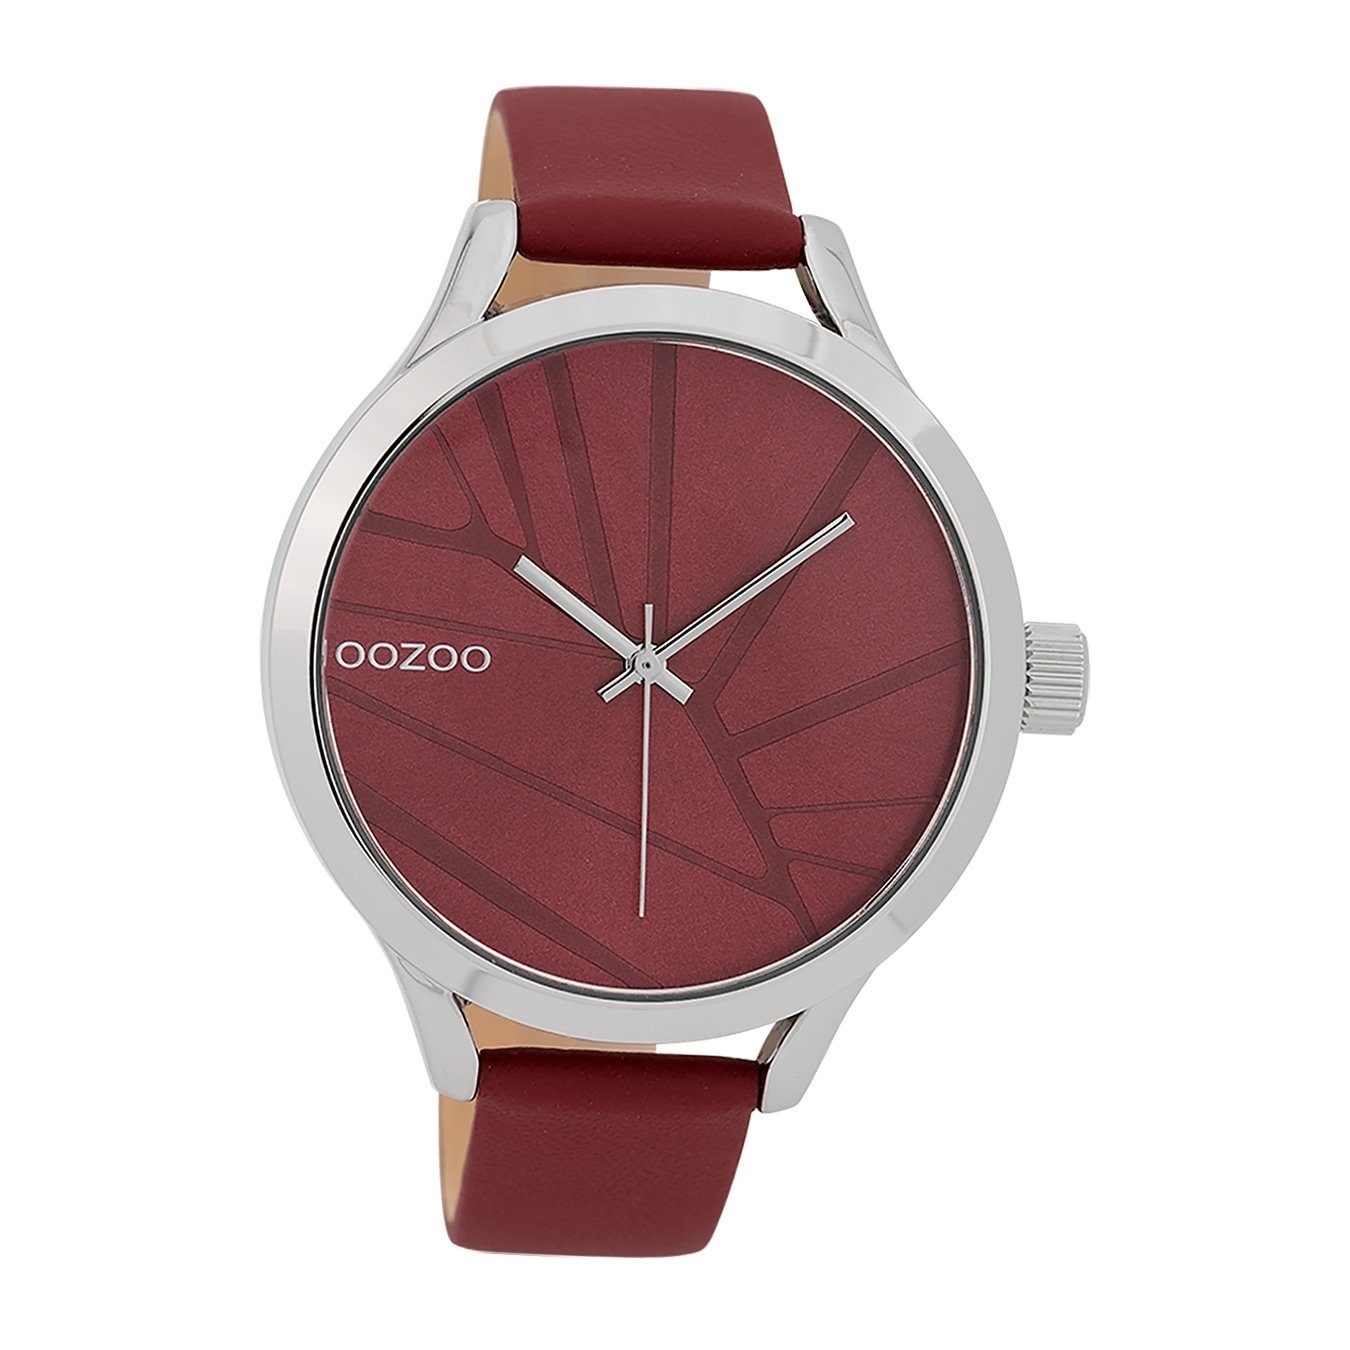 43mm), Quarzuhr rot, Oozoo (ca. (Analoguhr), OOZOO Fashion OOZOO Damenuhr rund, Armbanduhr Timepieces, Damen Lederarmband groß